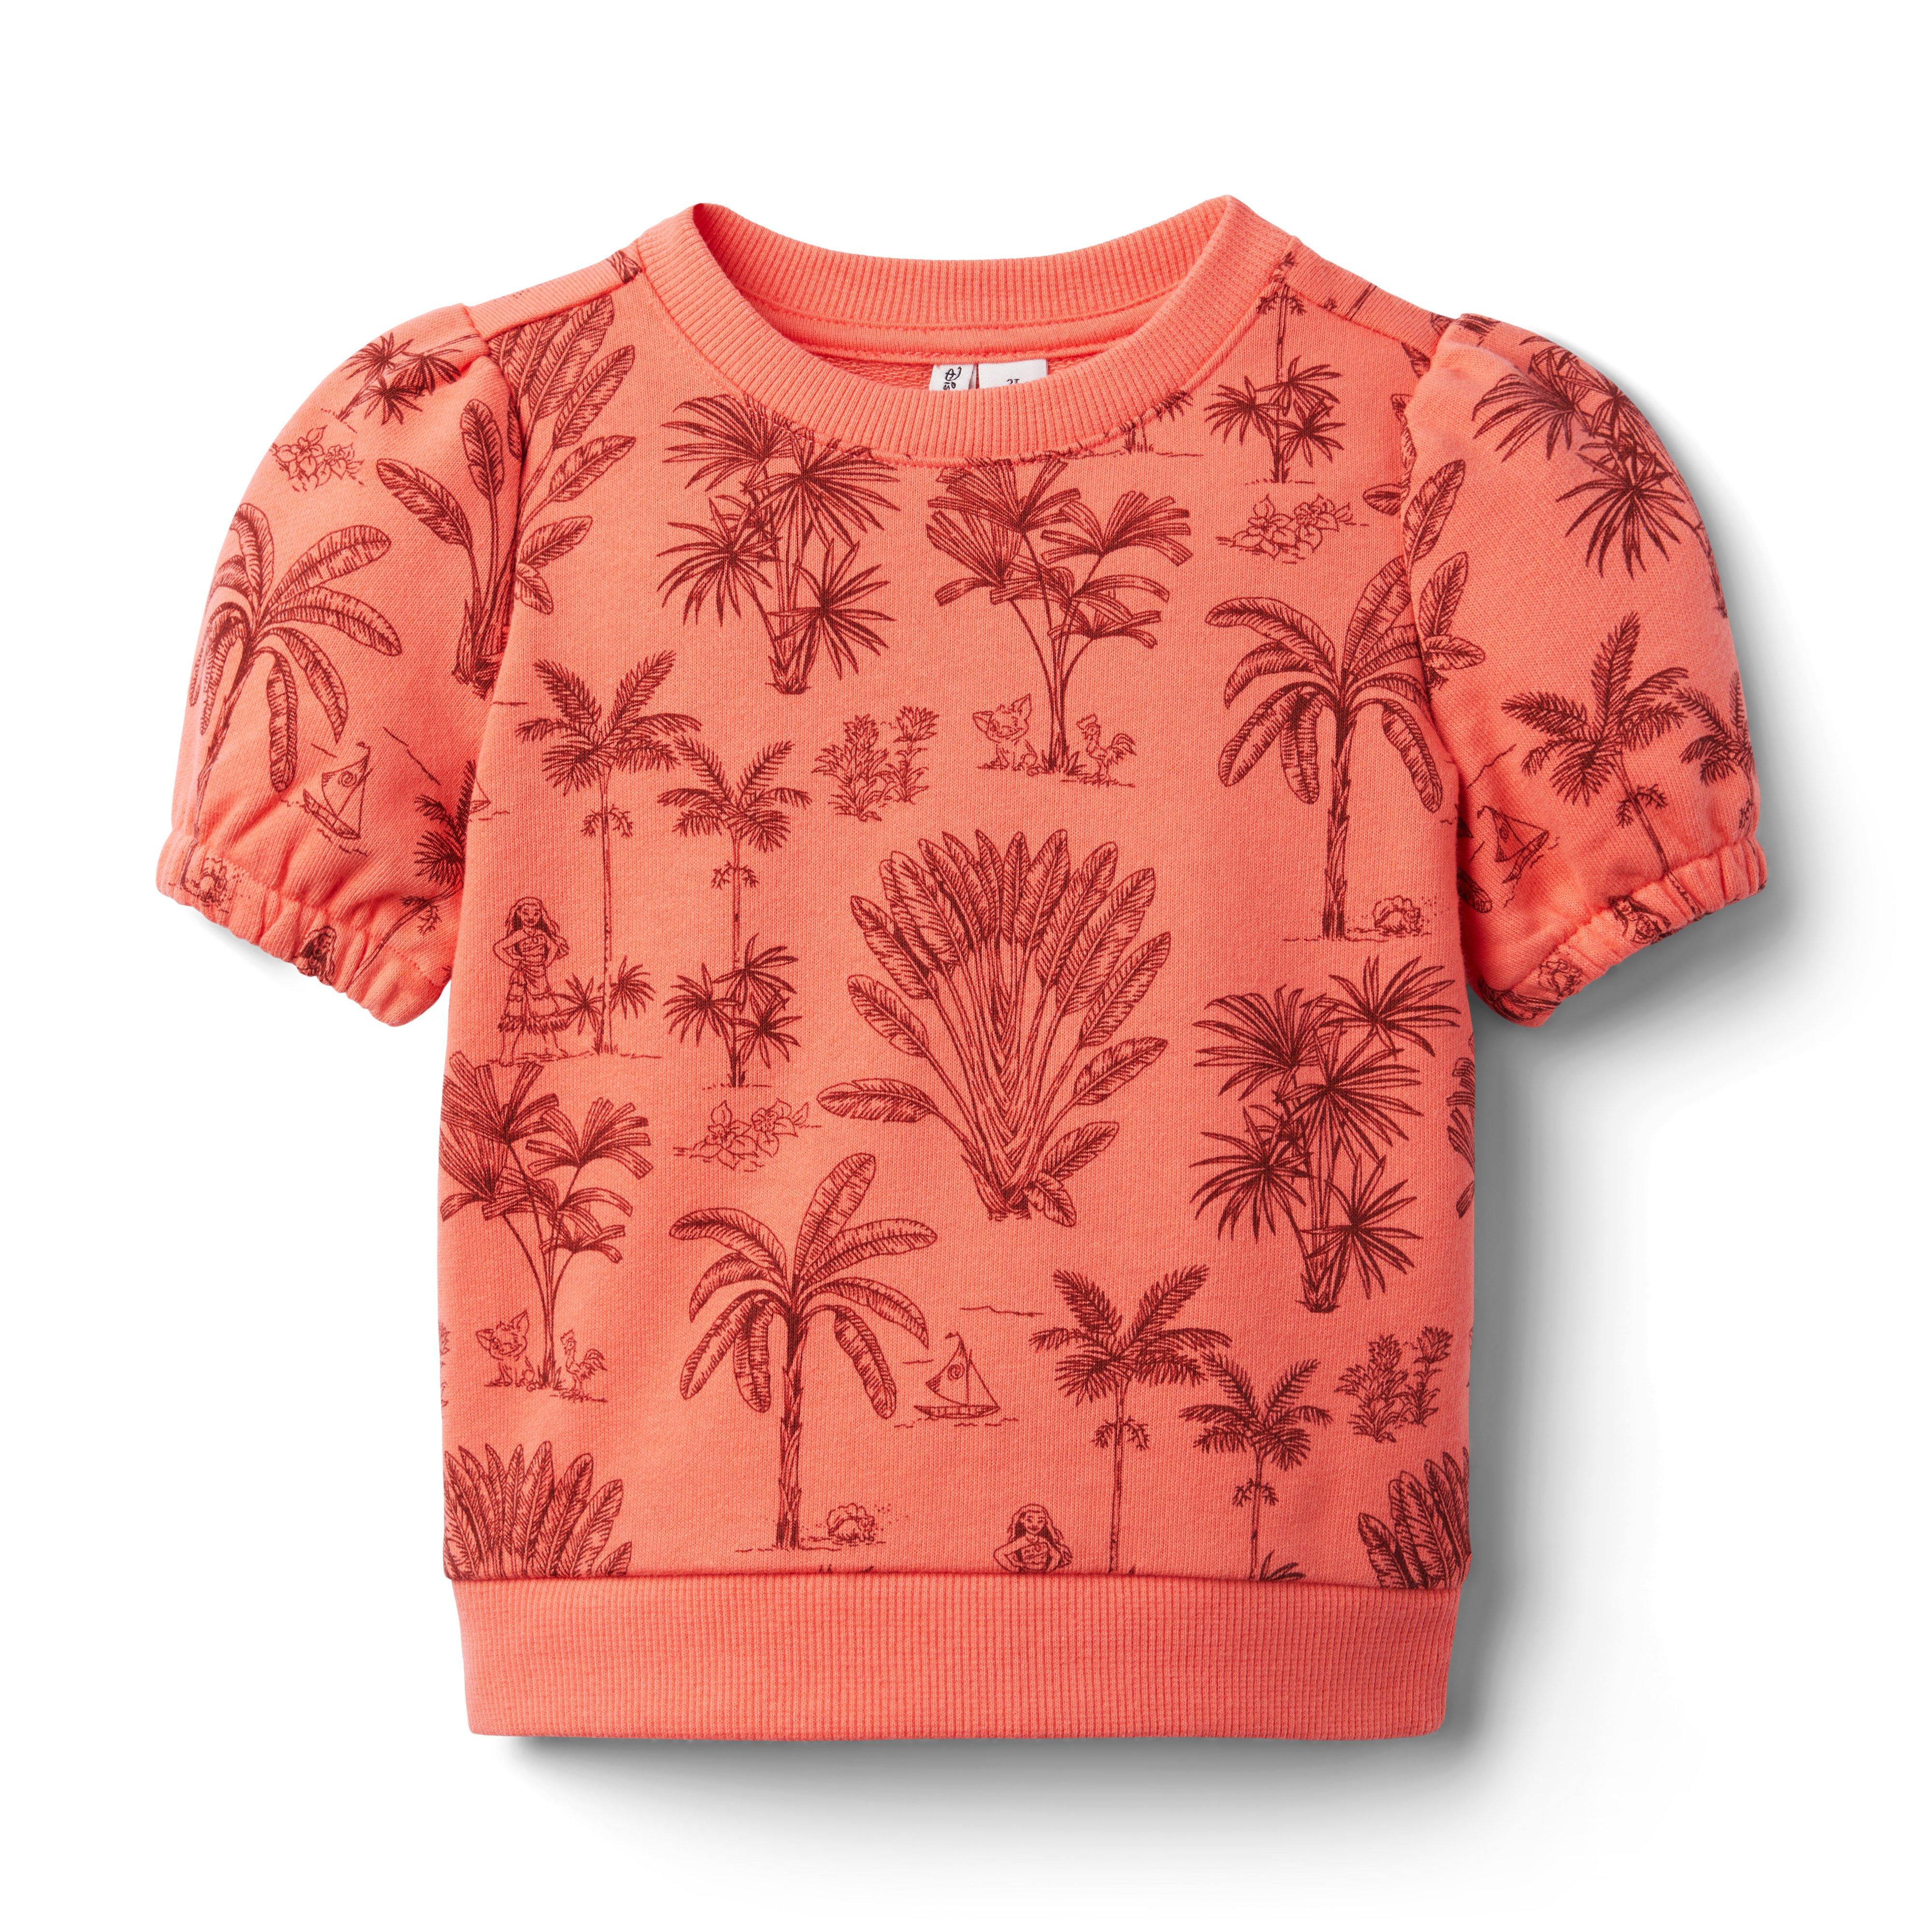 Disney Moana Palm Toile Sweatshirt